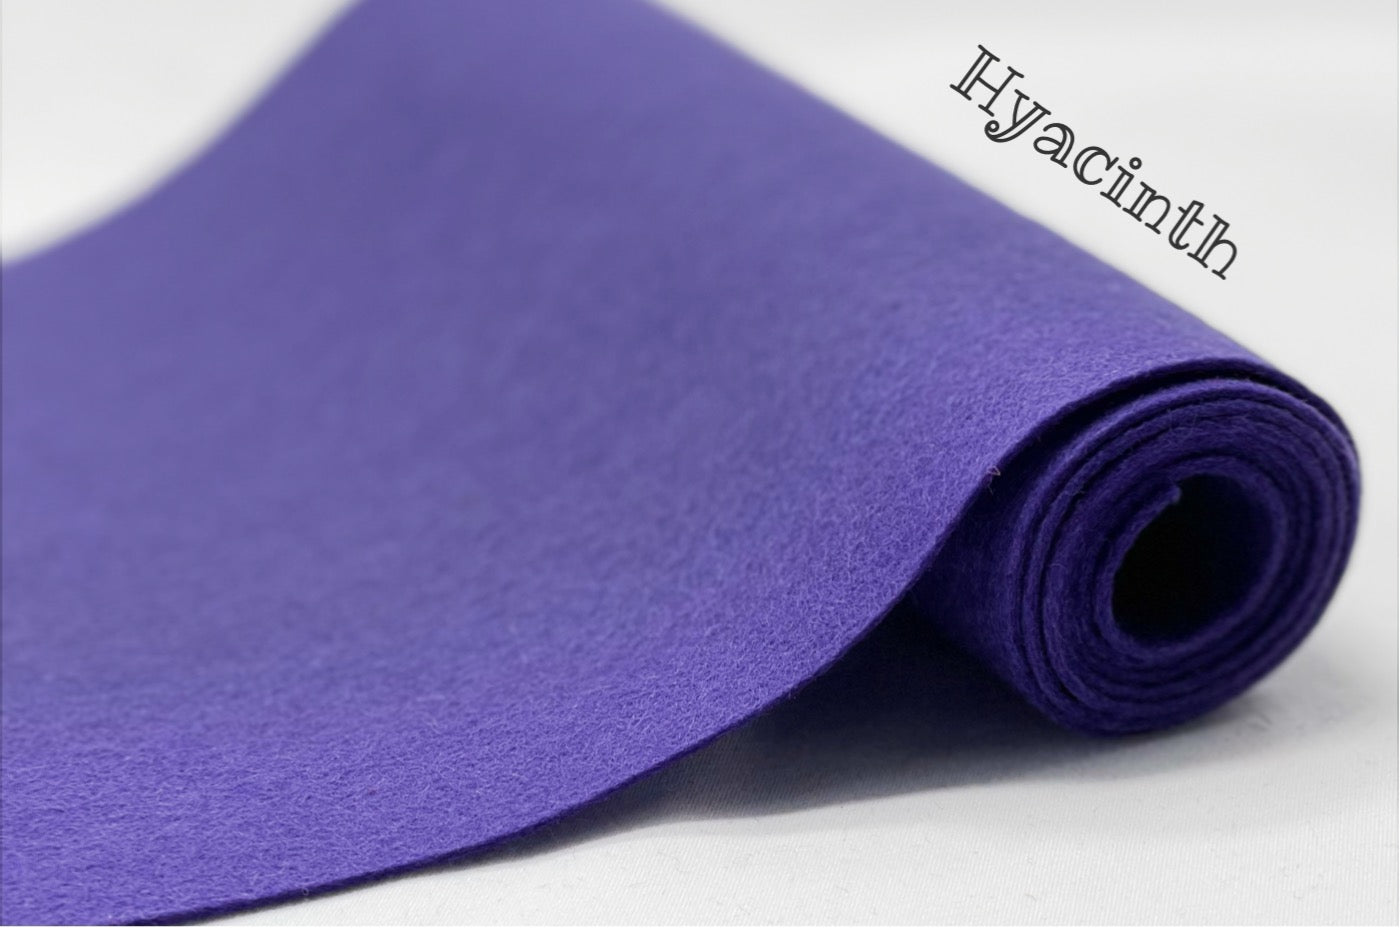 All the Purples - 100% Wool Felt - 7 shades